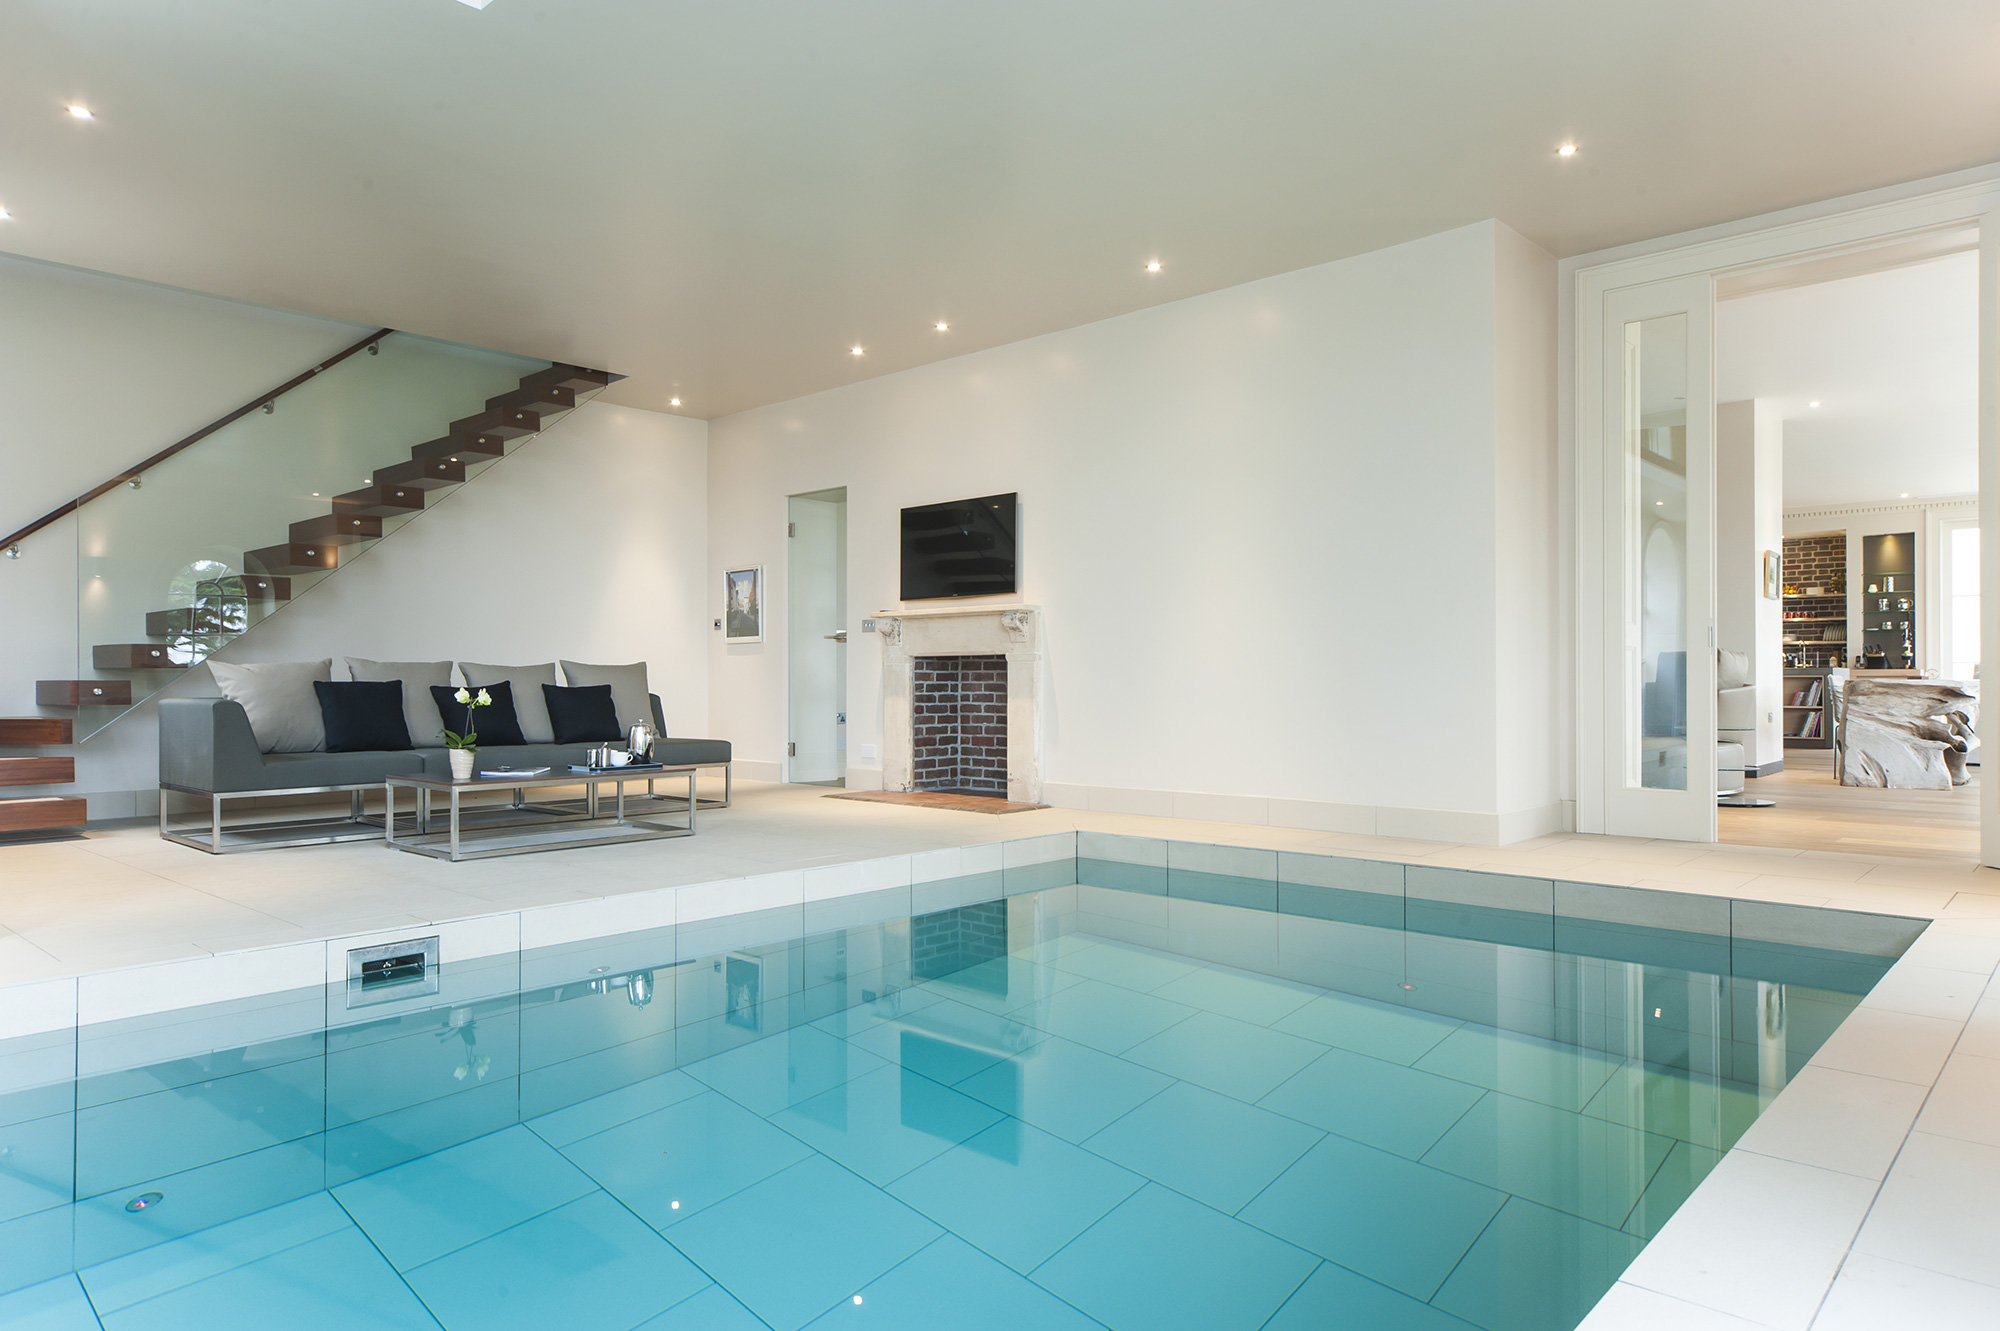 Hidden Swimming Pool with Movable Hydraulic Floor | Aqua ...